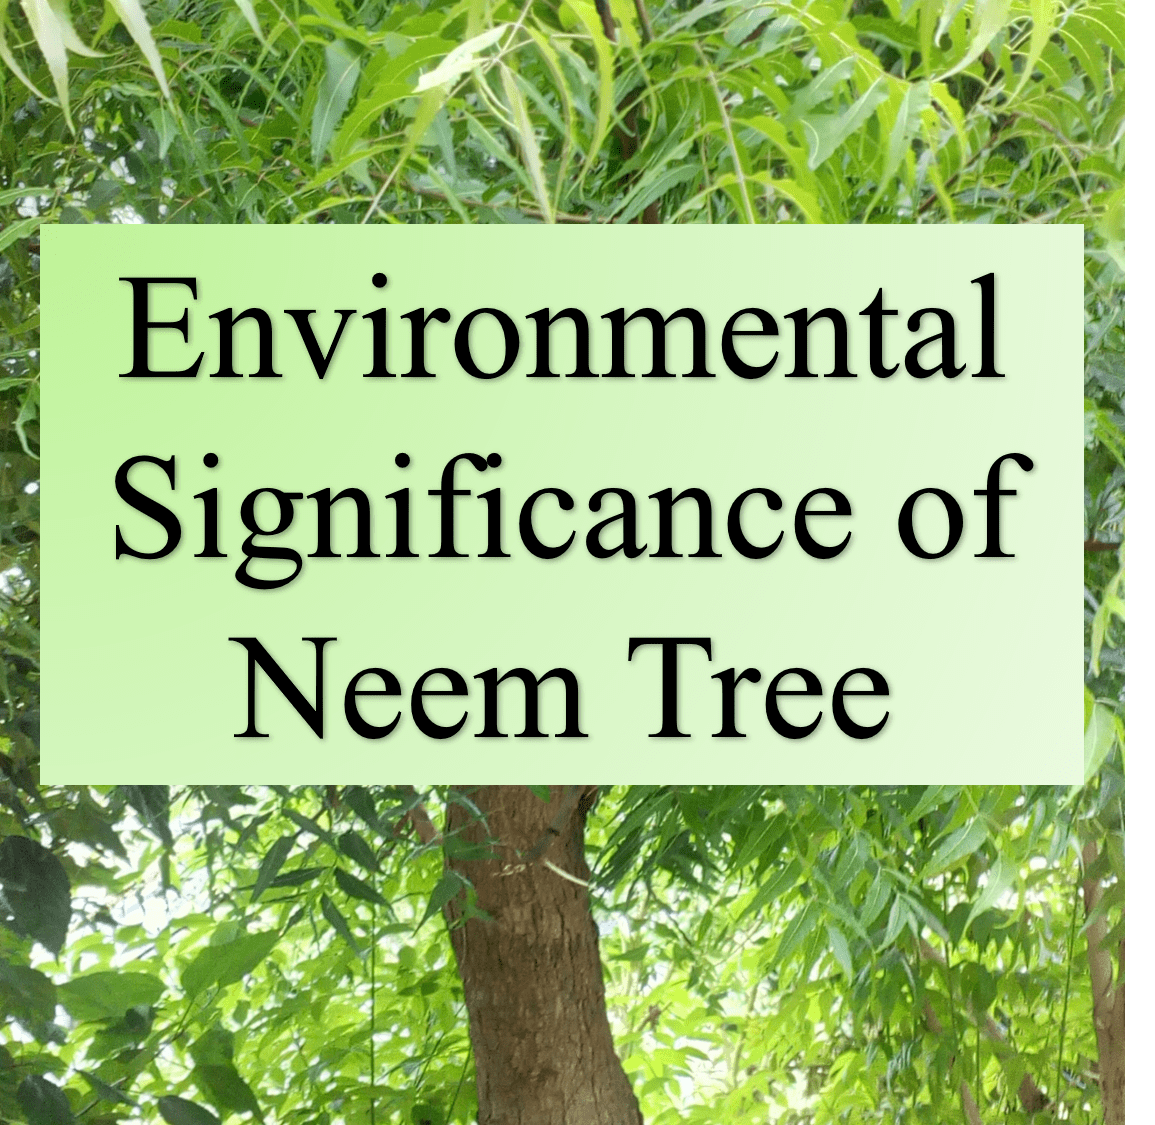 Environmental Significance of Neem Tree